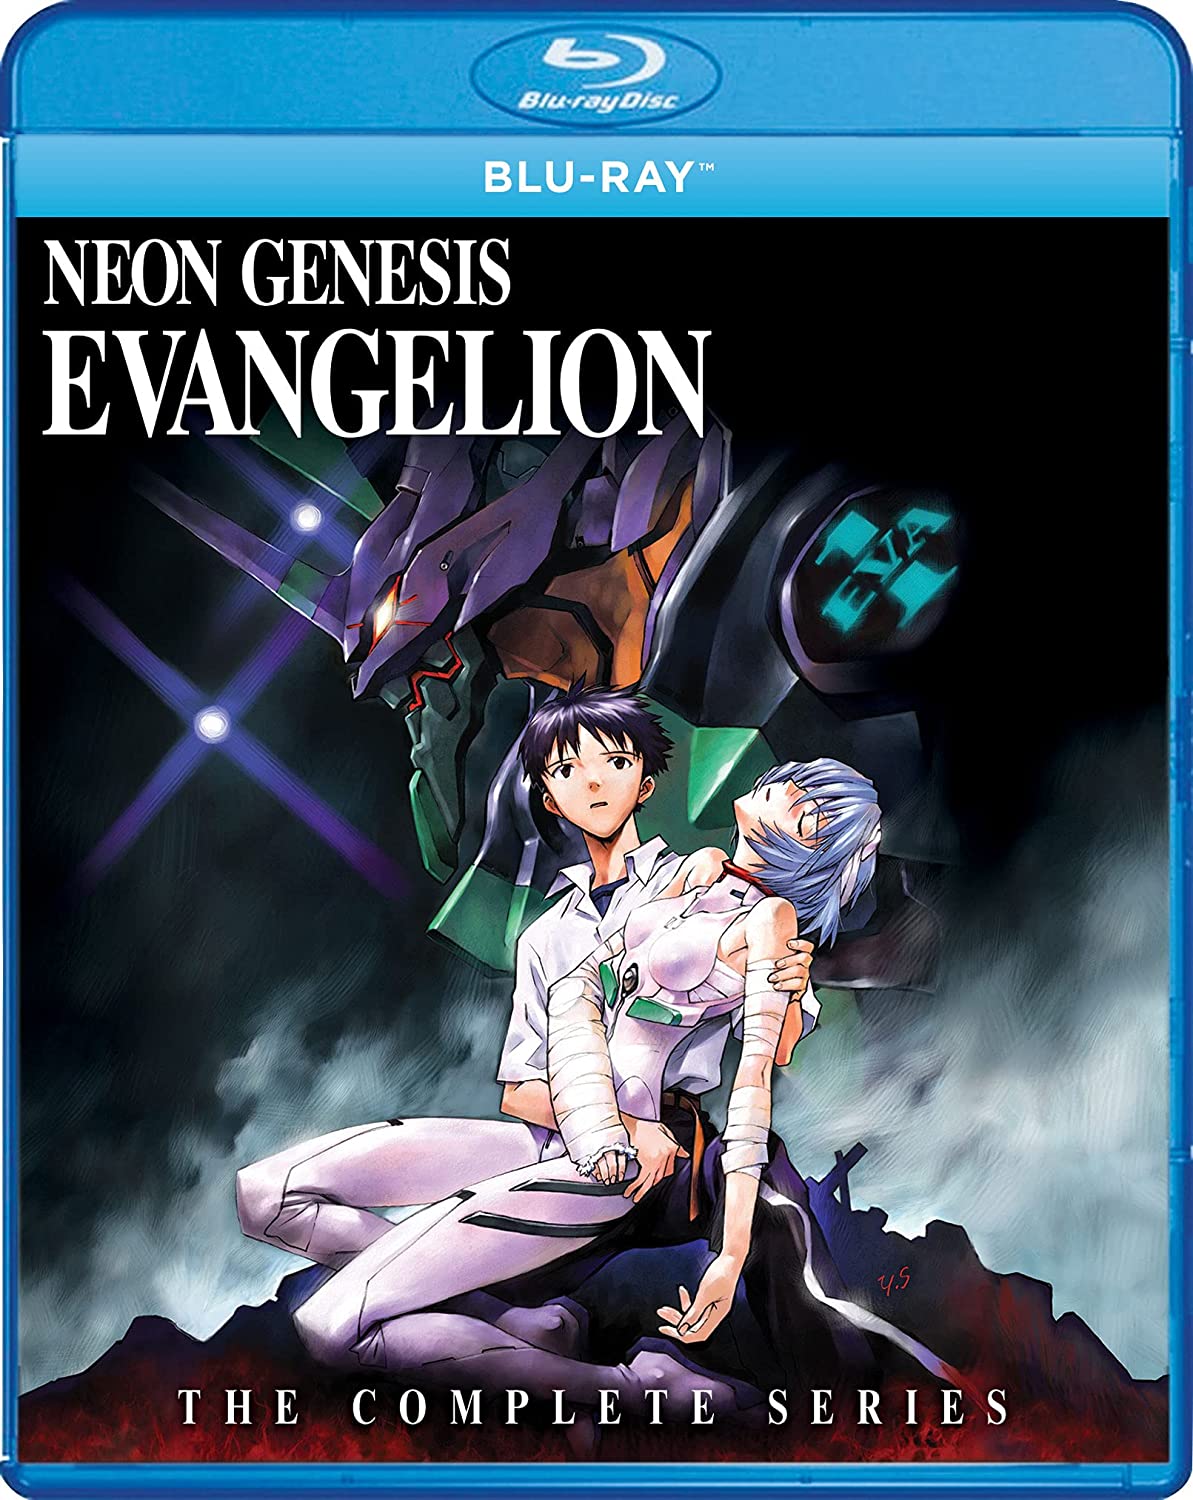 Neon Genesis Evangelion- The Complete Series Blu-ray front